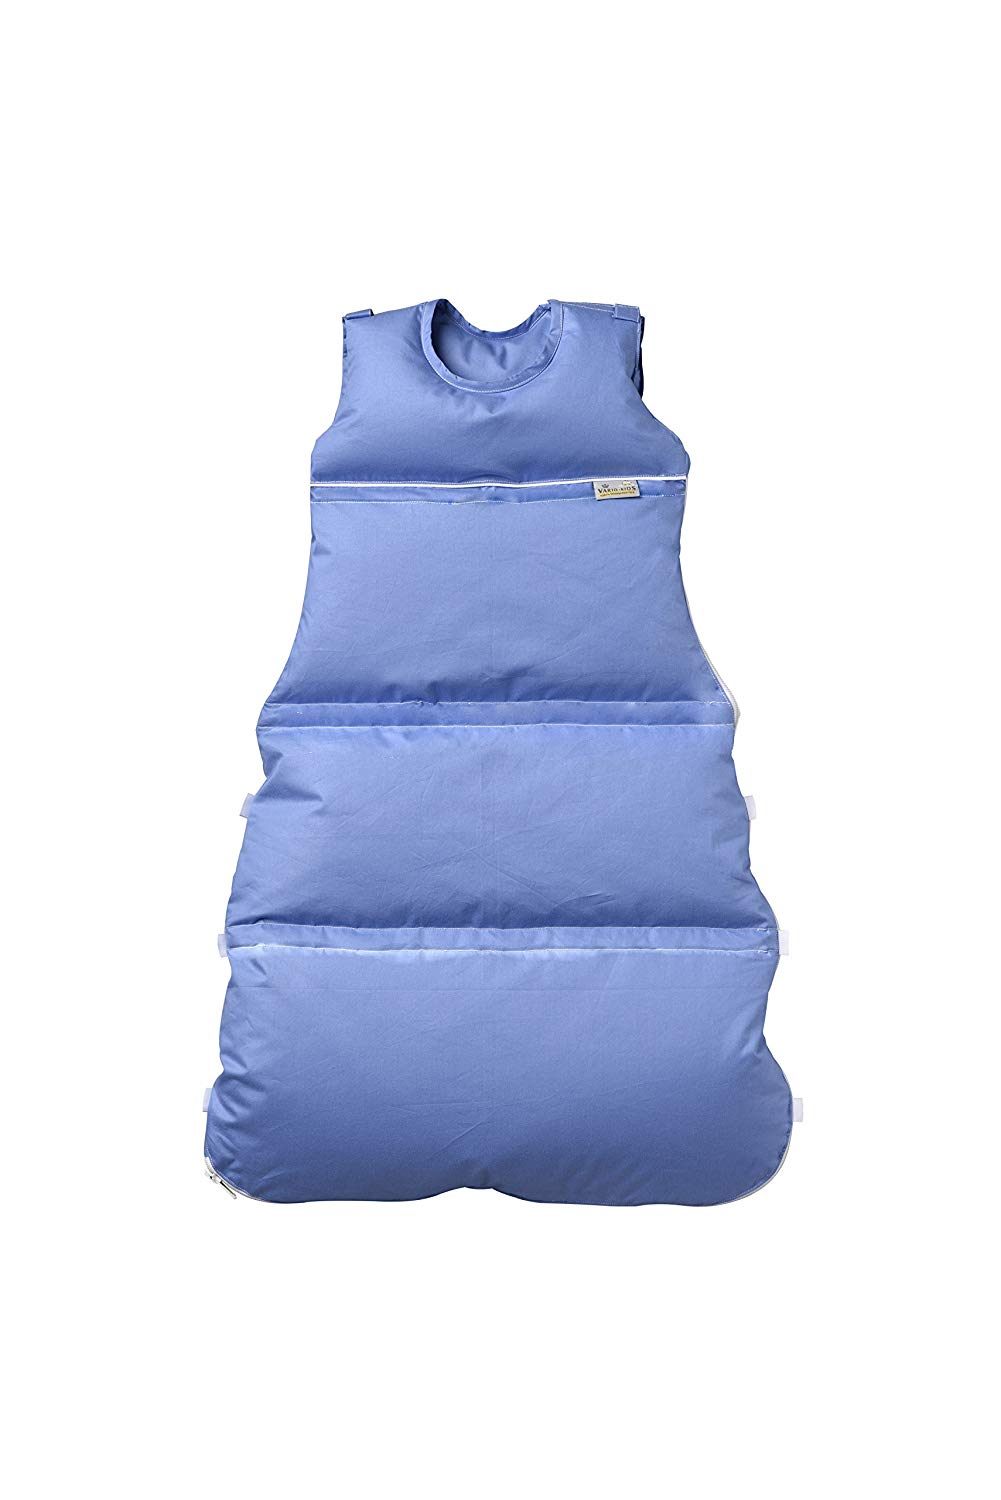 Premium Down Sleeping Bag, Adjustable Length, Age Approximately 3-20 Months, Azure, 80 cm